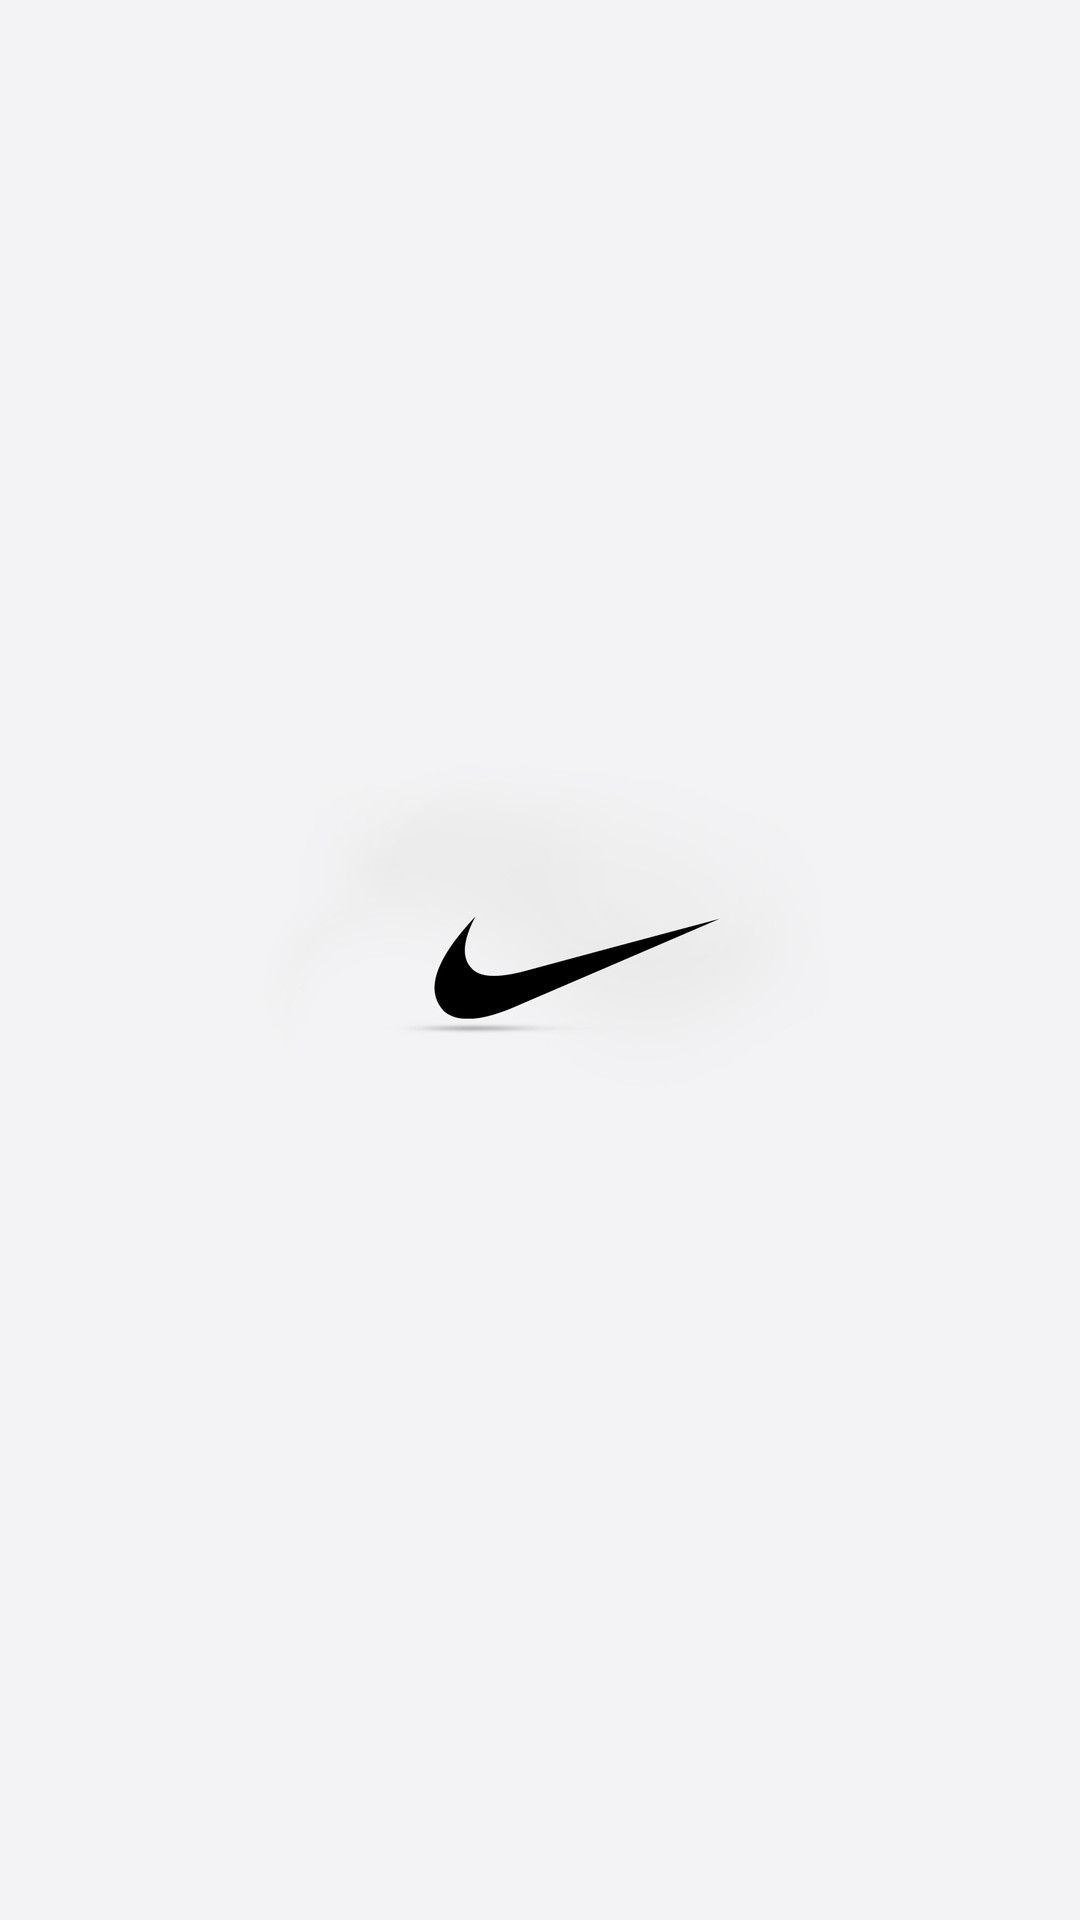 4K Nike Wallpaper Free 4K Nike Background 2020. Nike wallpaper, Nike wallpaper iphone, Nike logo wallpaper